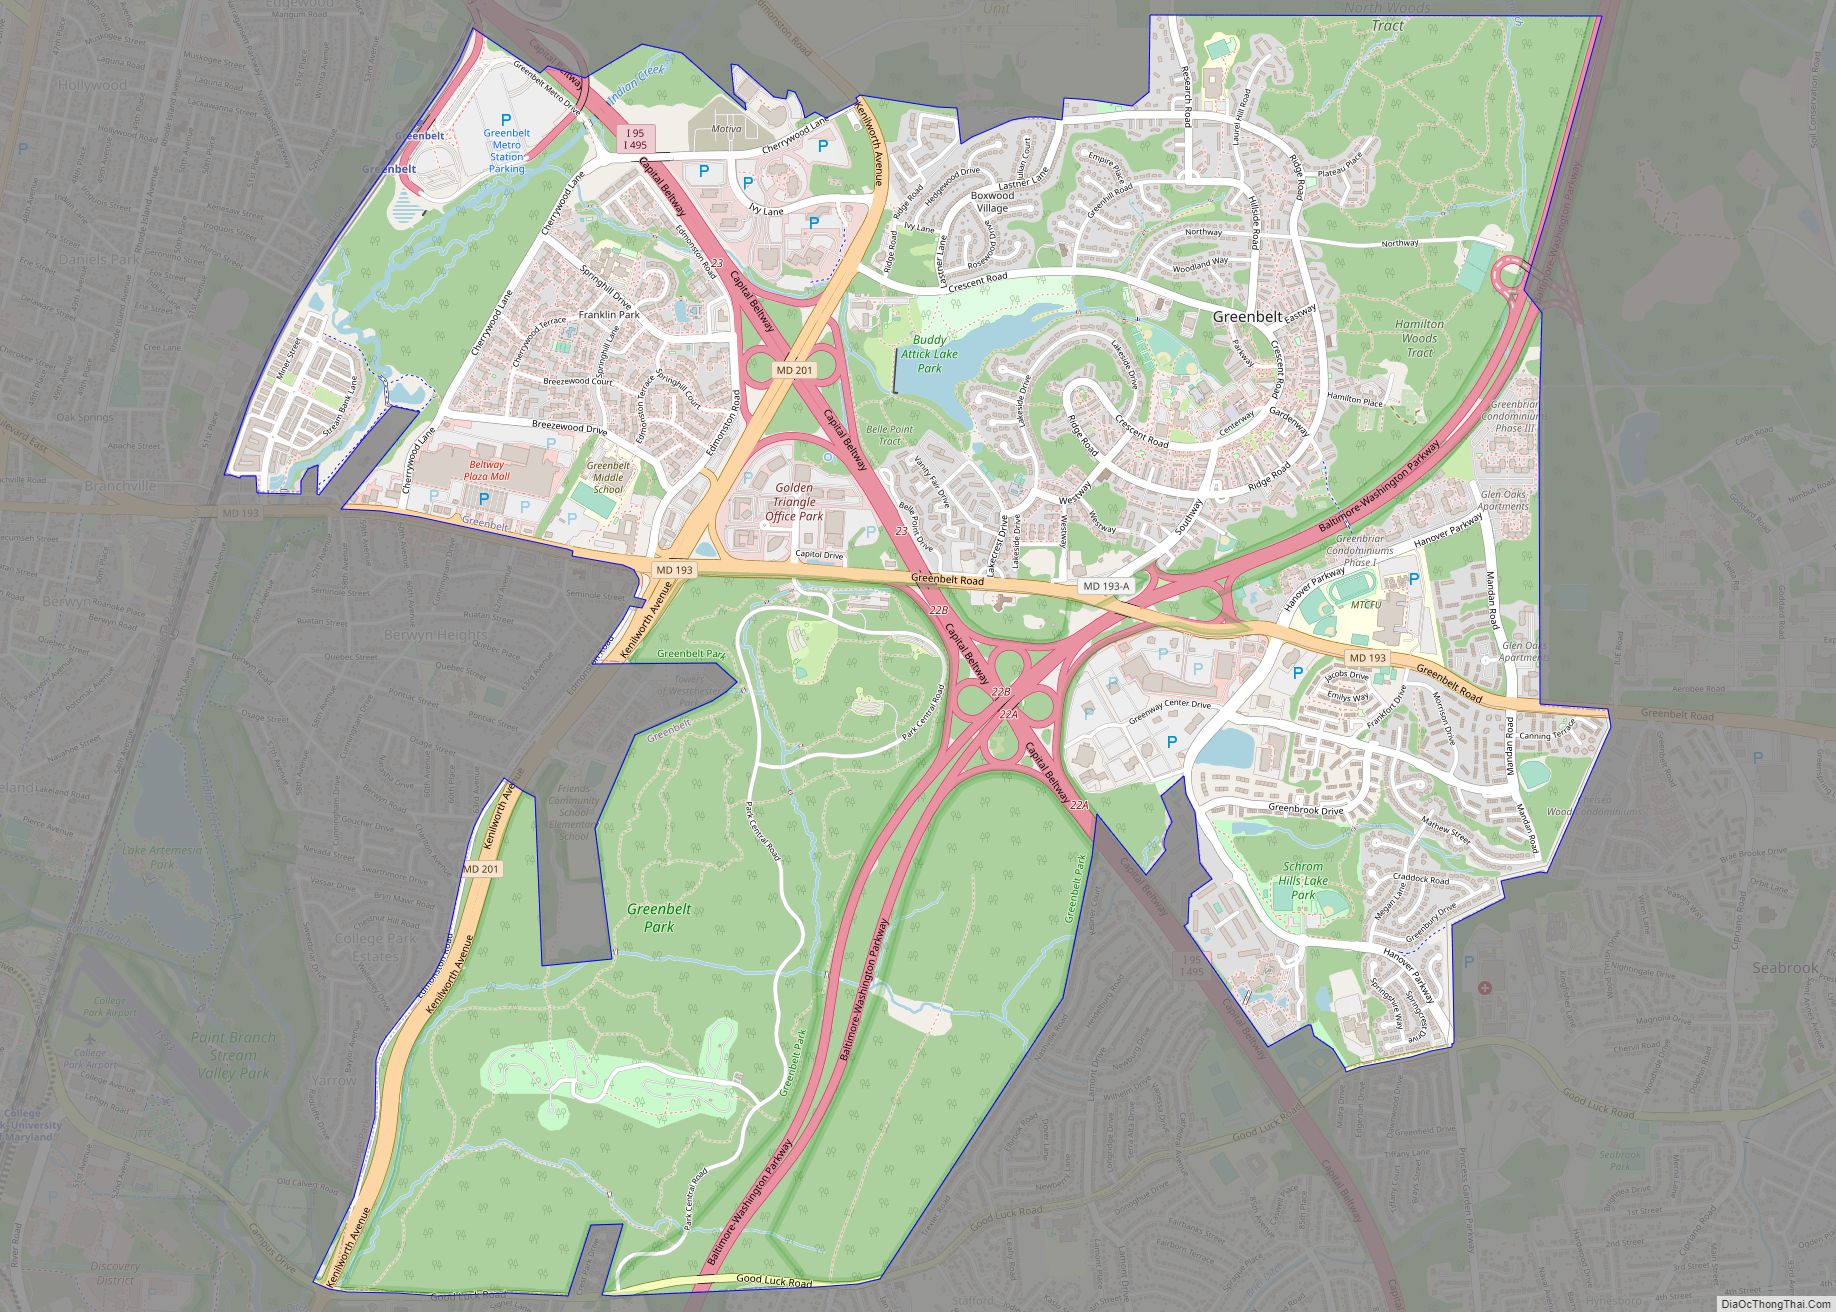 Map of Greenbelt city